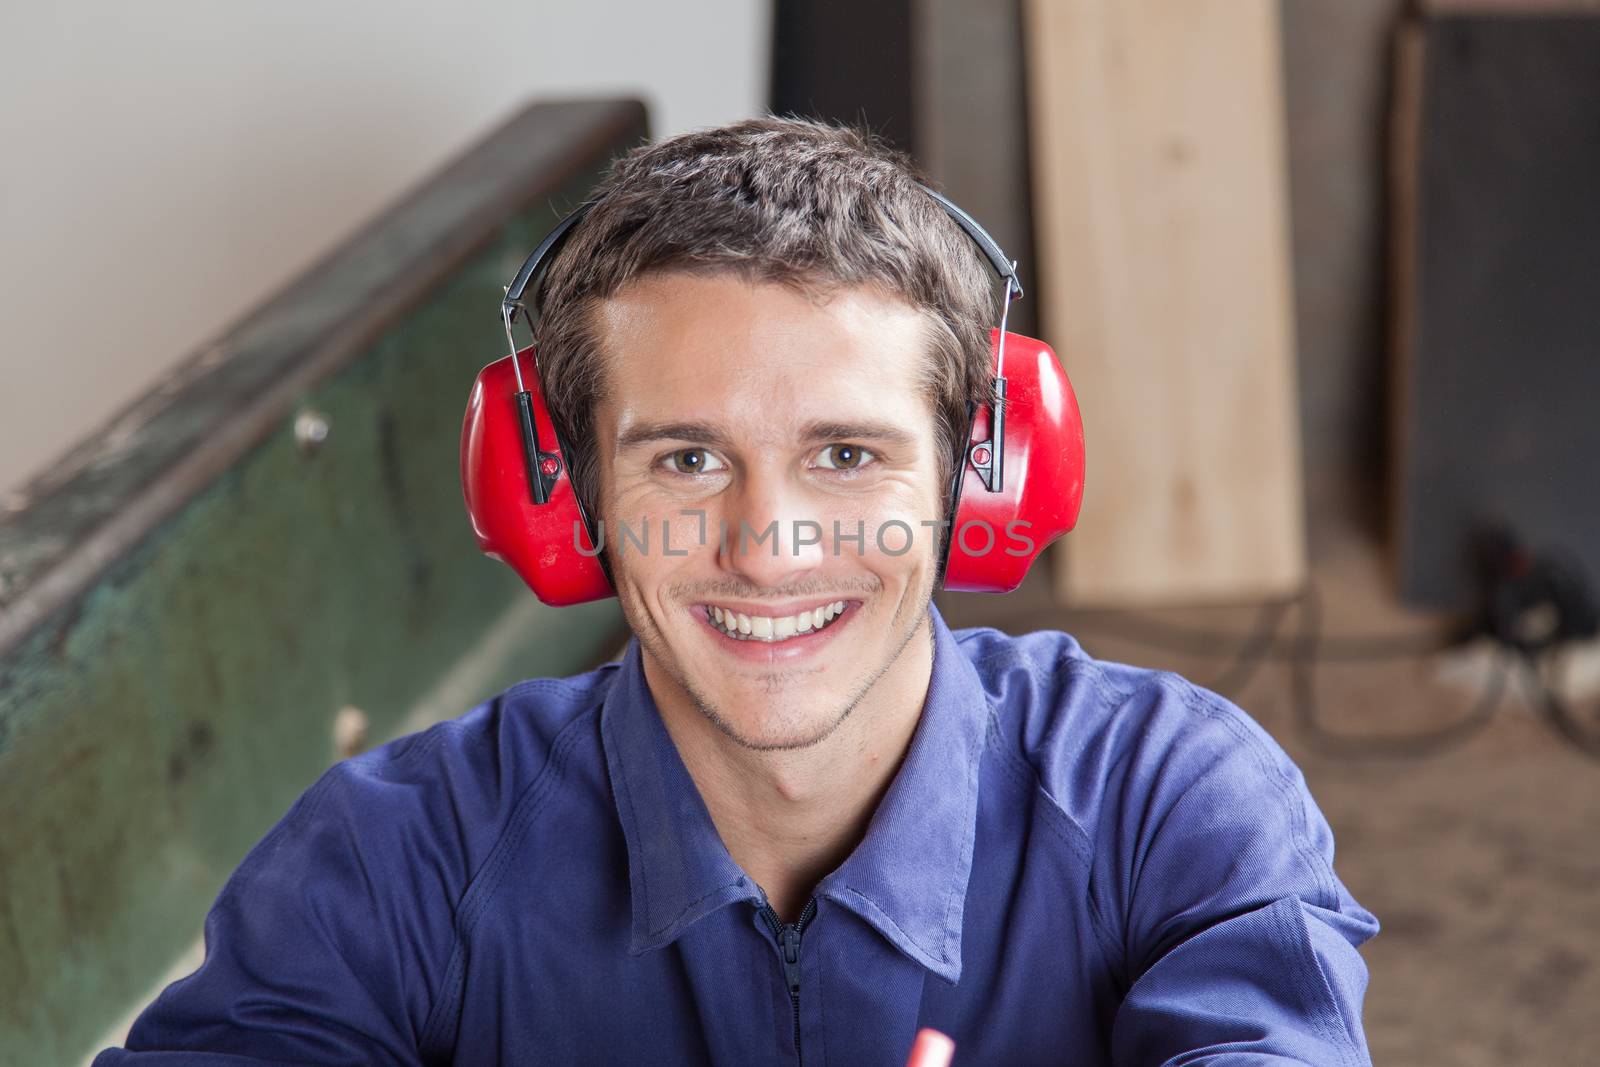 Smiling carpenter with headphones